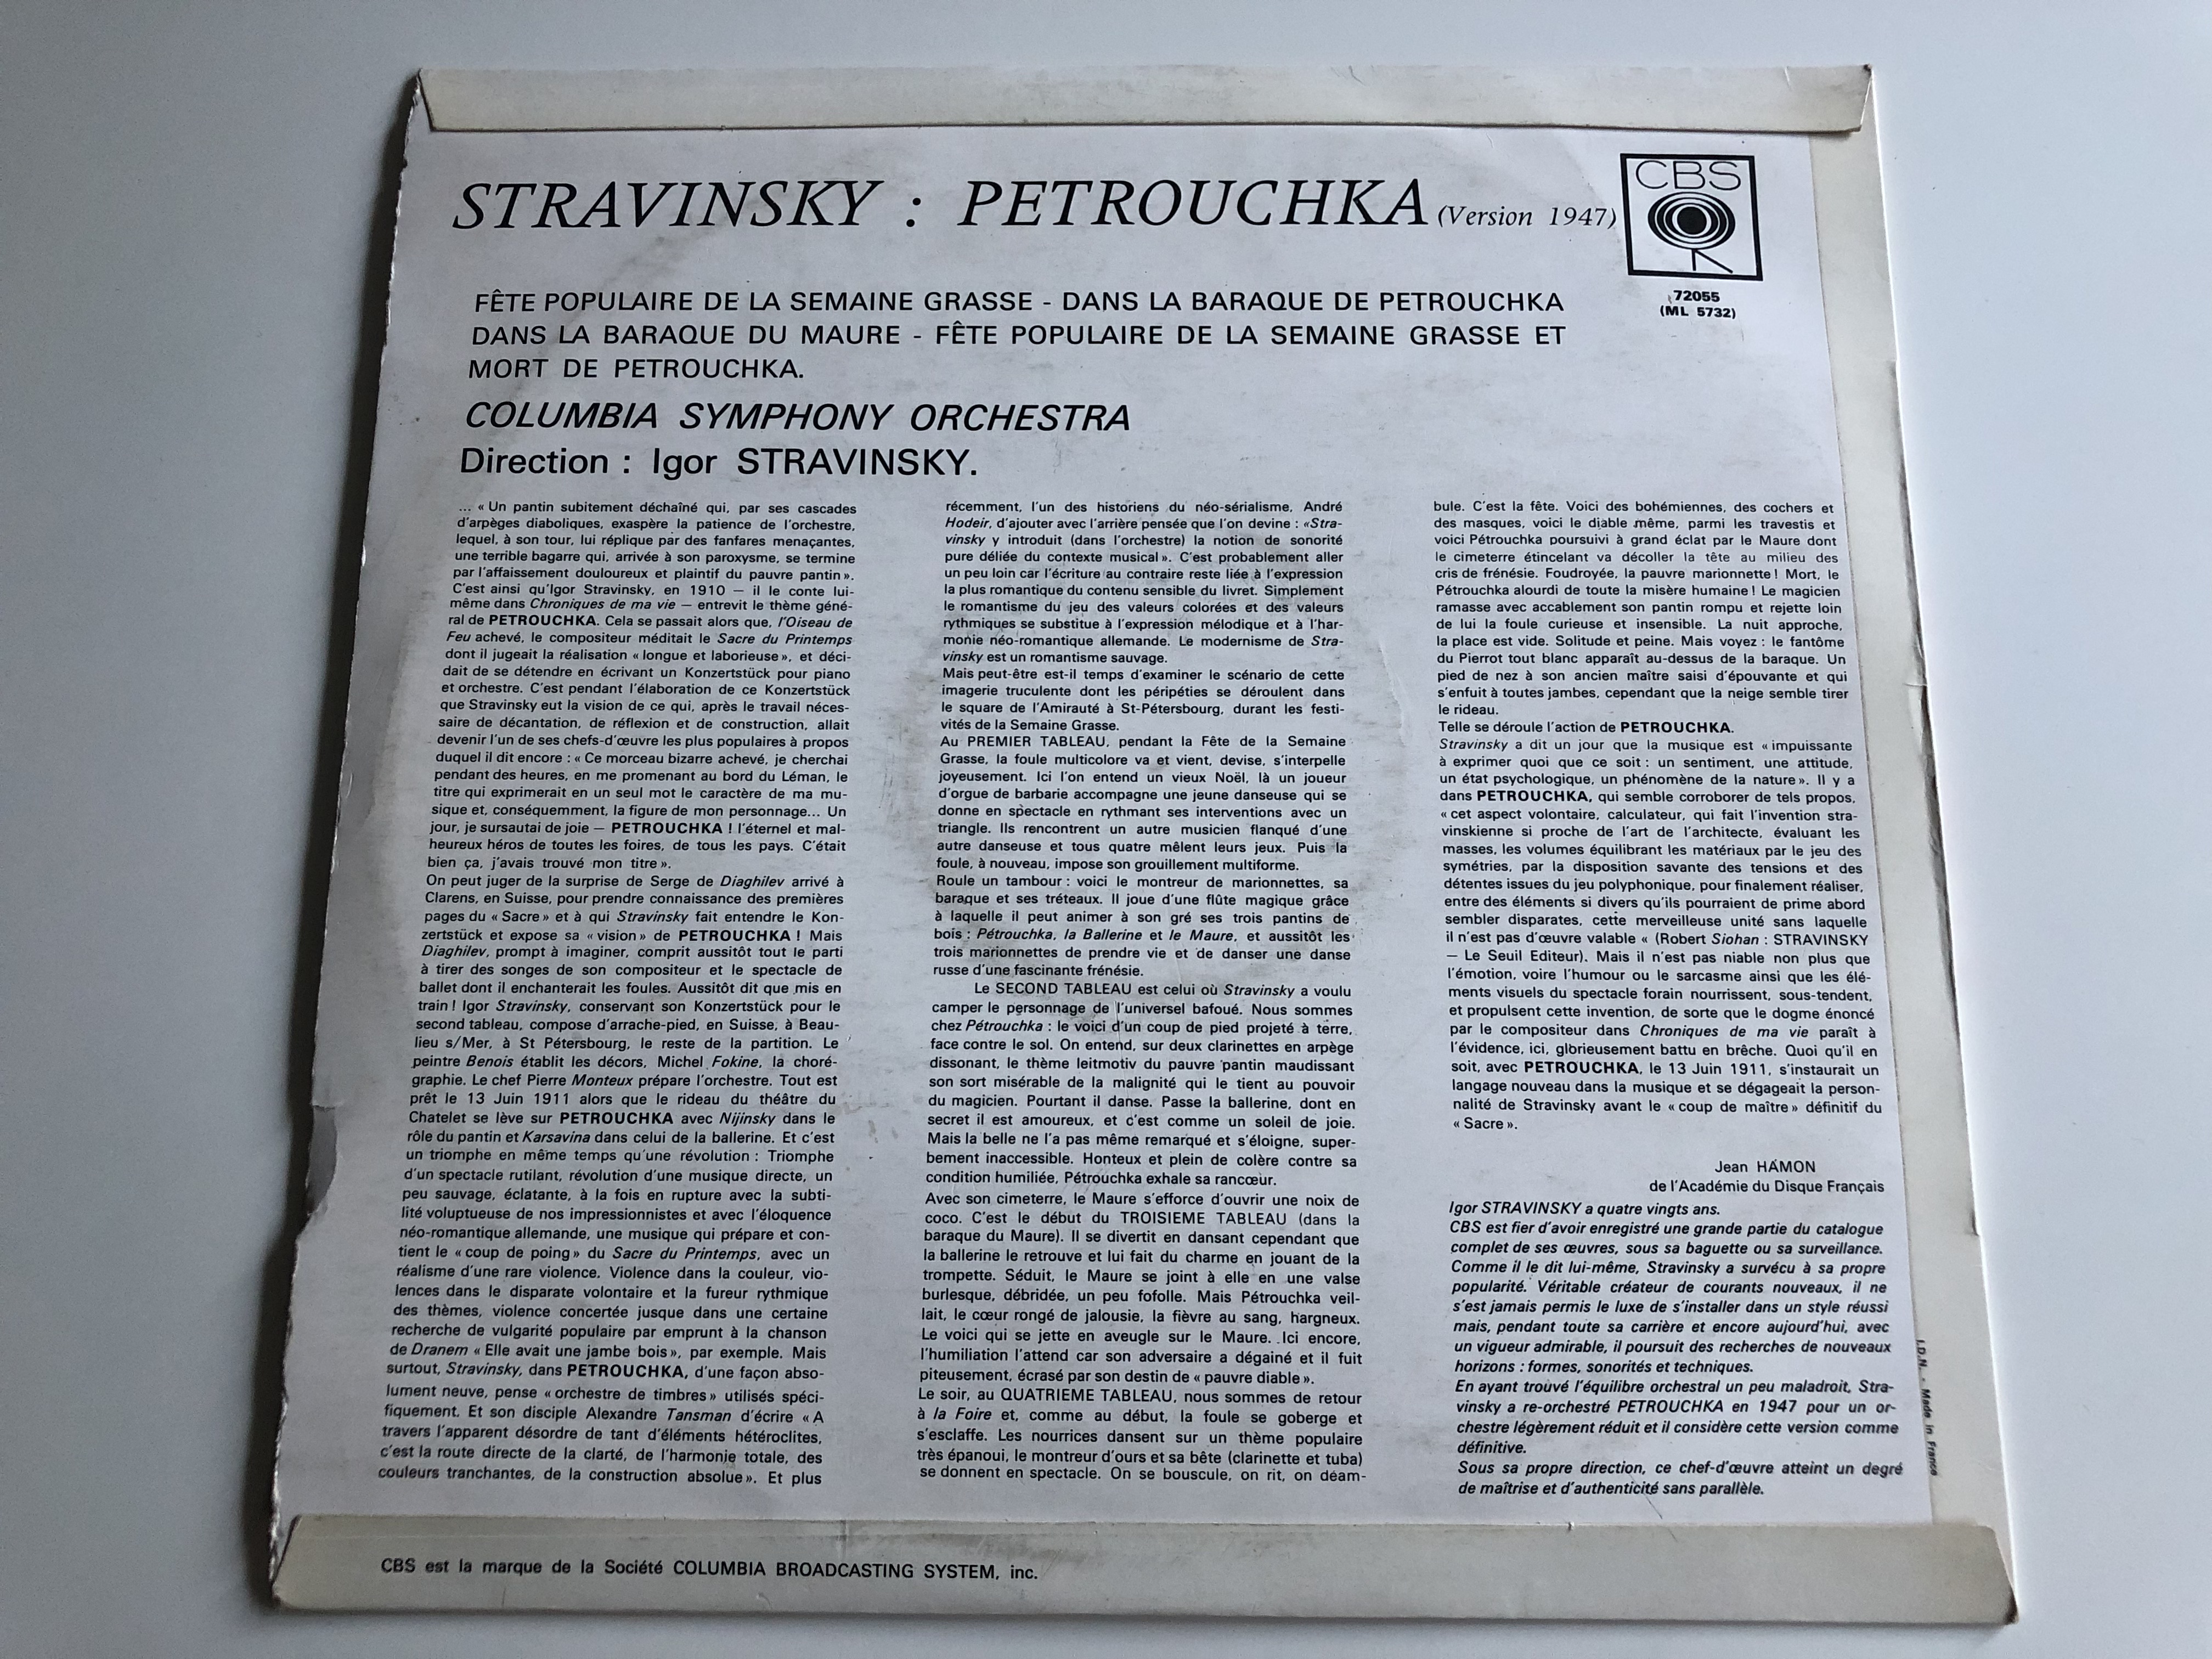 stravinsky-petrouchka-columbia-symphony-orchestra-conducted-igor-stravinsky-version-1947-cbs-lp-72055-3-.jpg